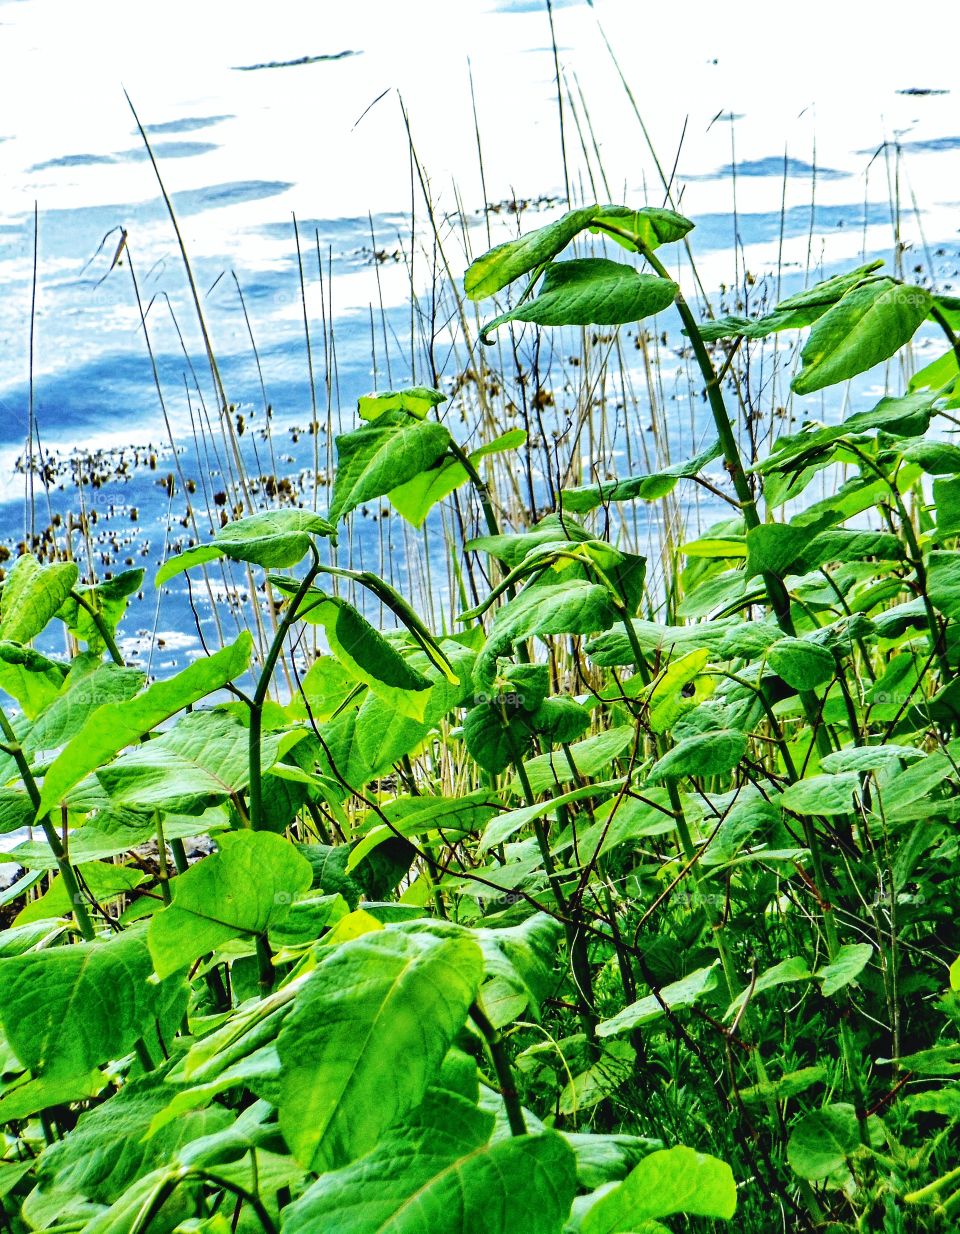 Lakeside vegetation